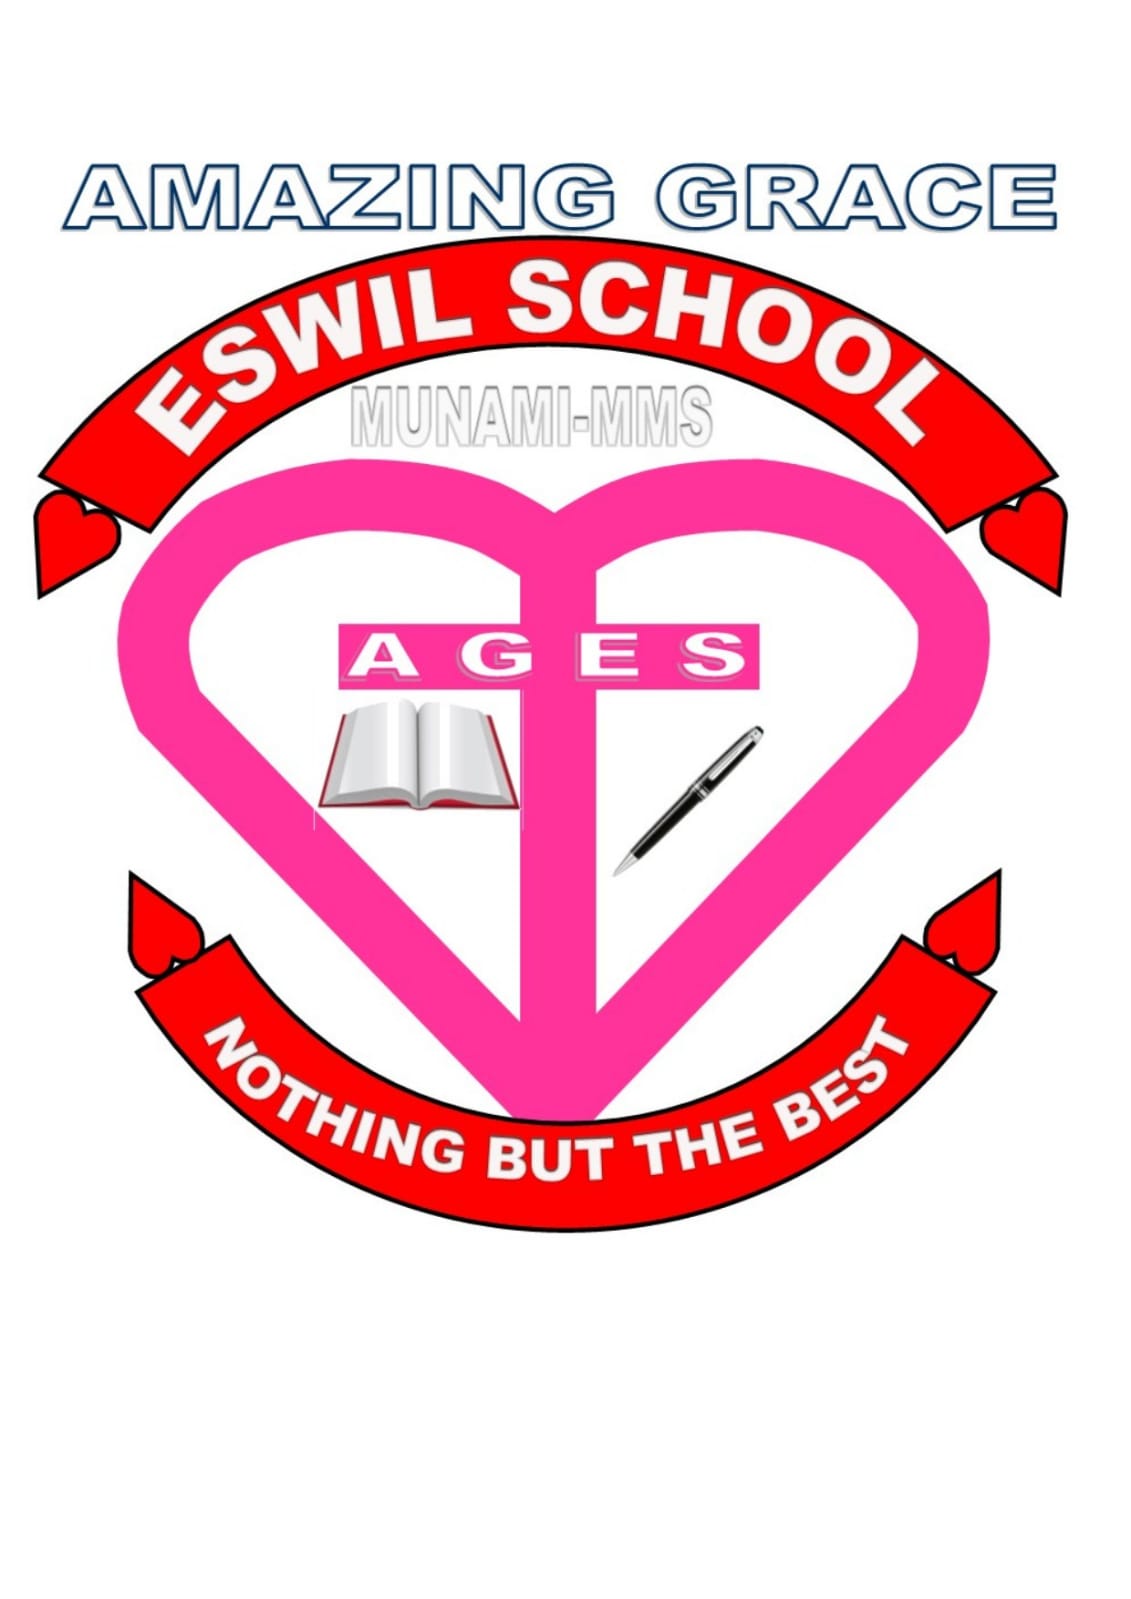 Amazing Grace Eswil School Munami